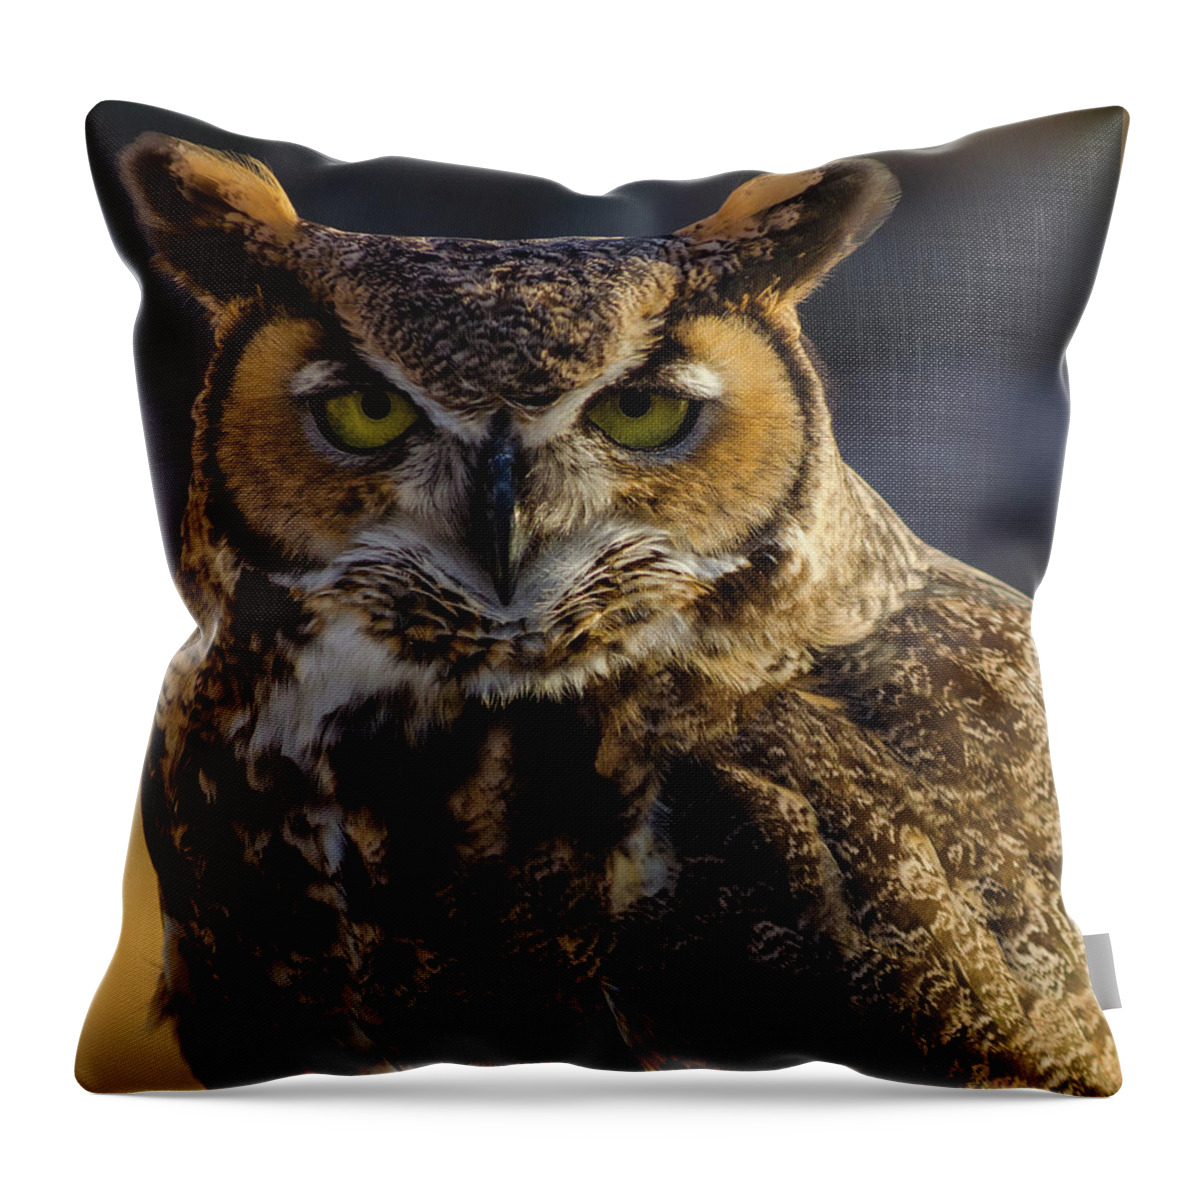 Owl Throw Pillow featuring the photograph Intense Owl by Douglas Killourie